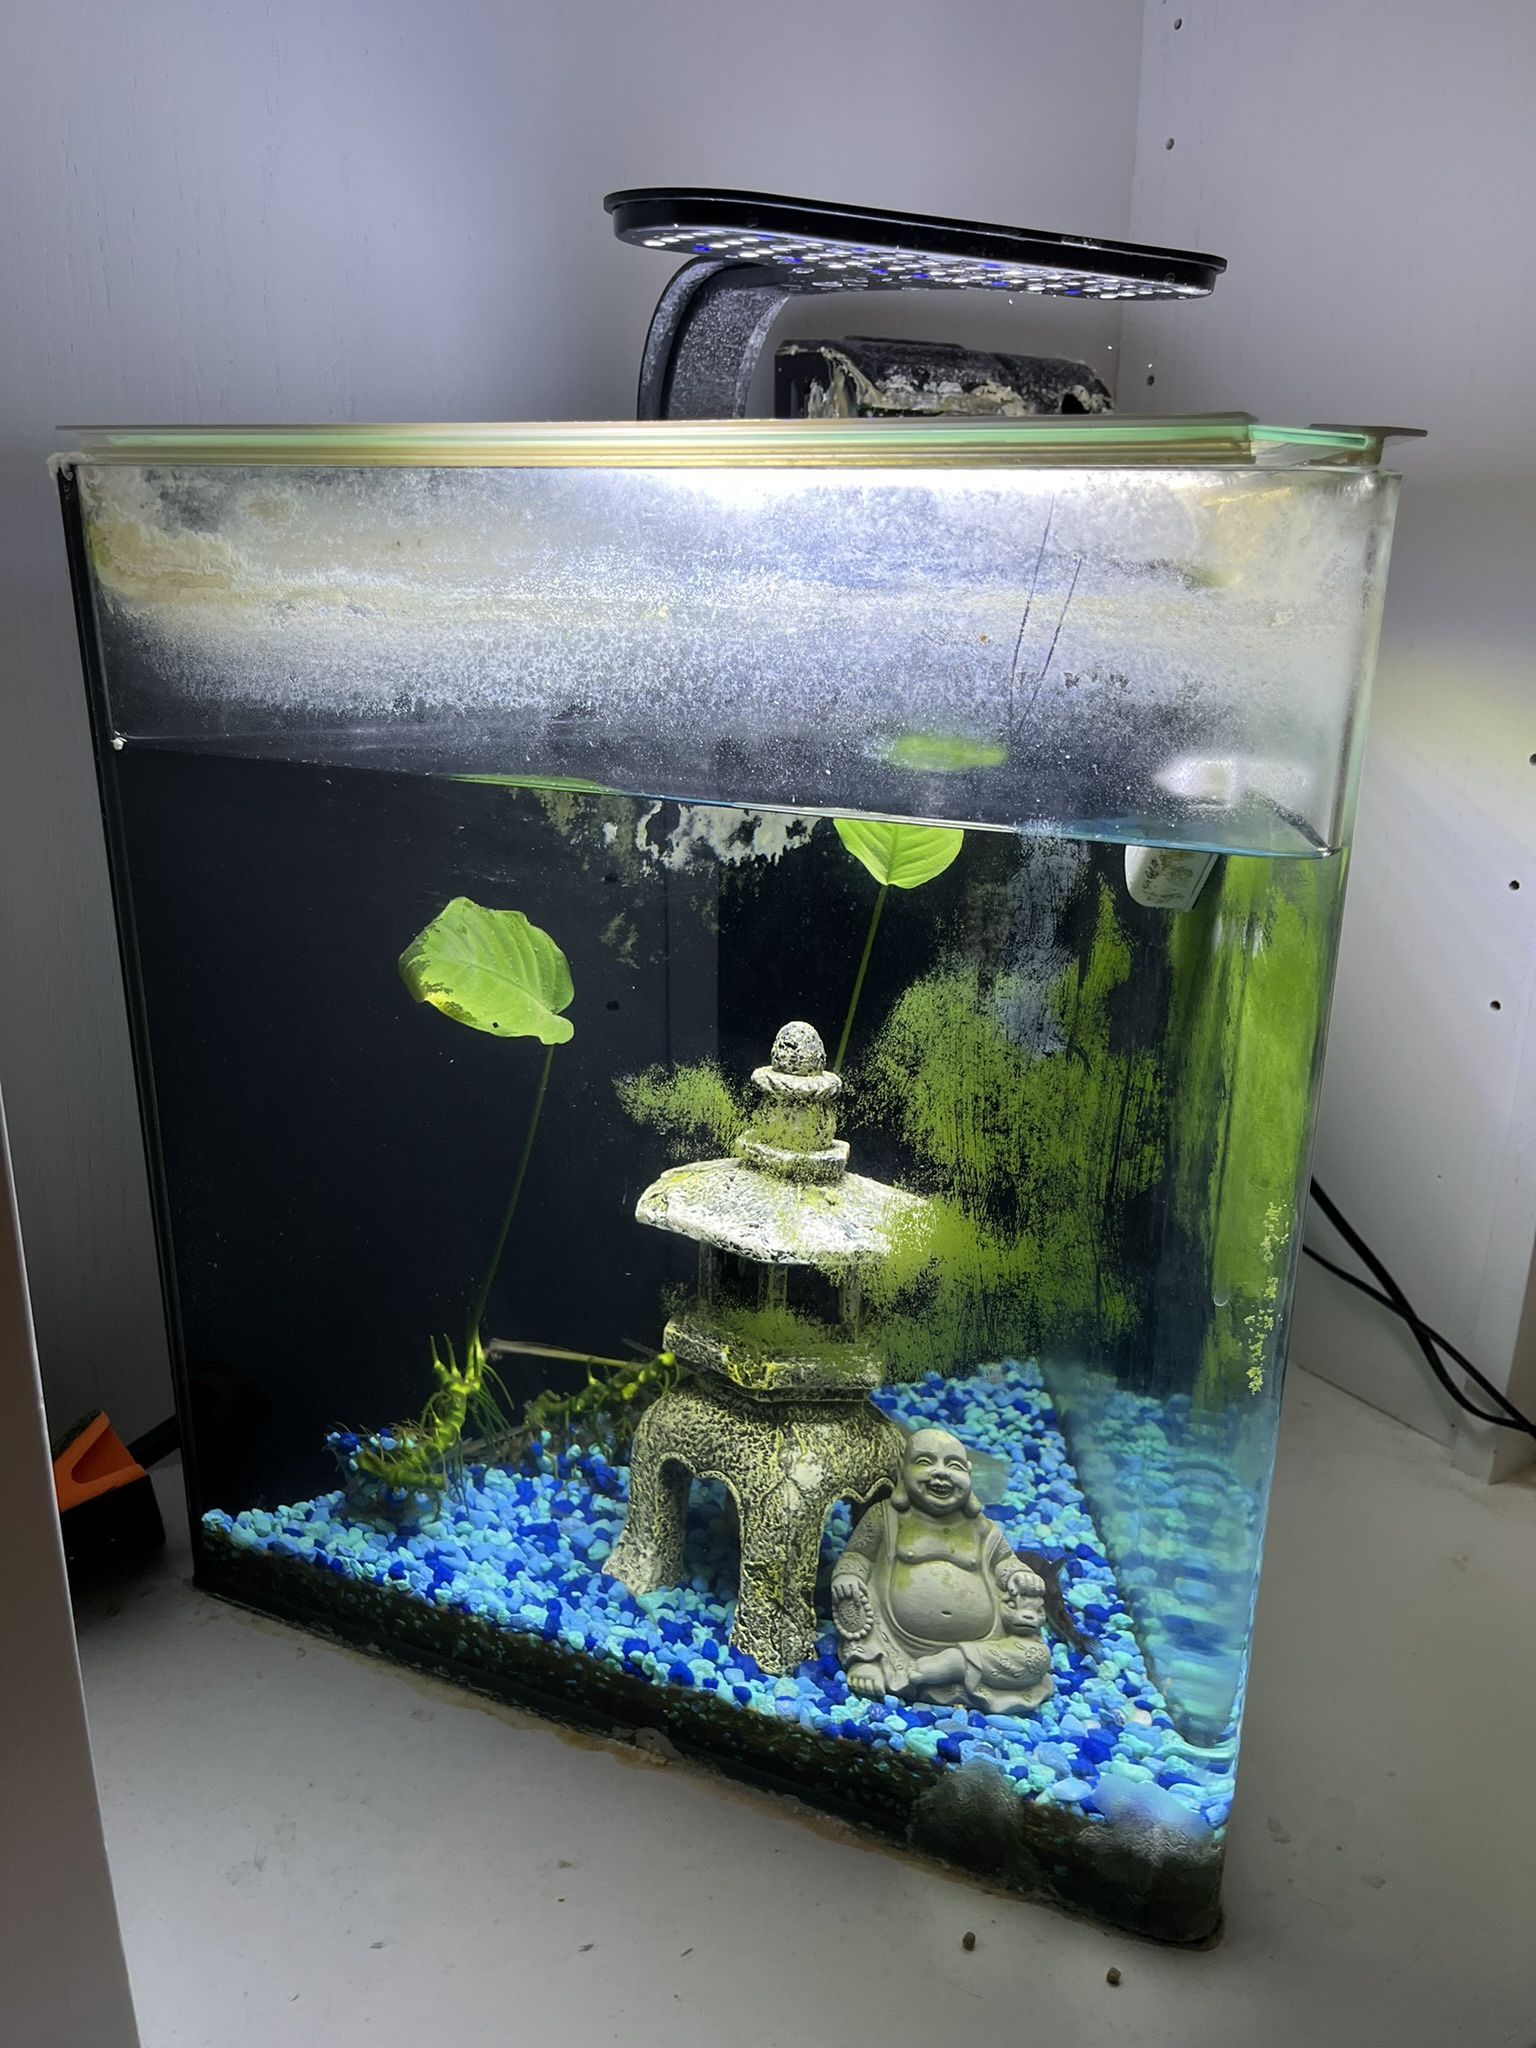 Fish Tank With A Cory Catfish